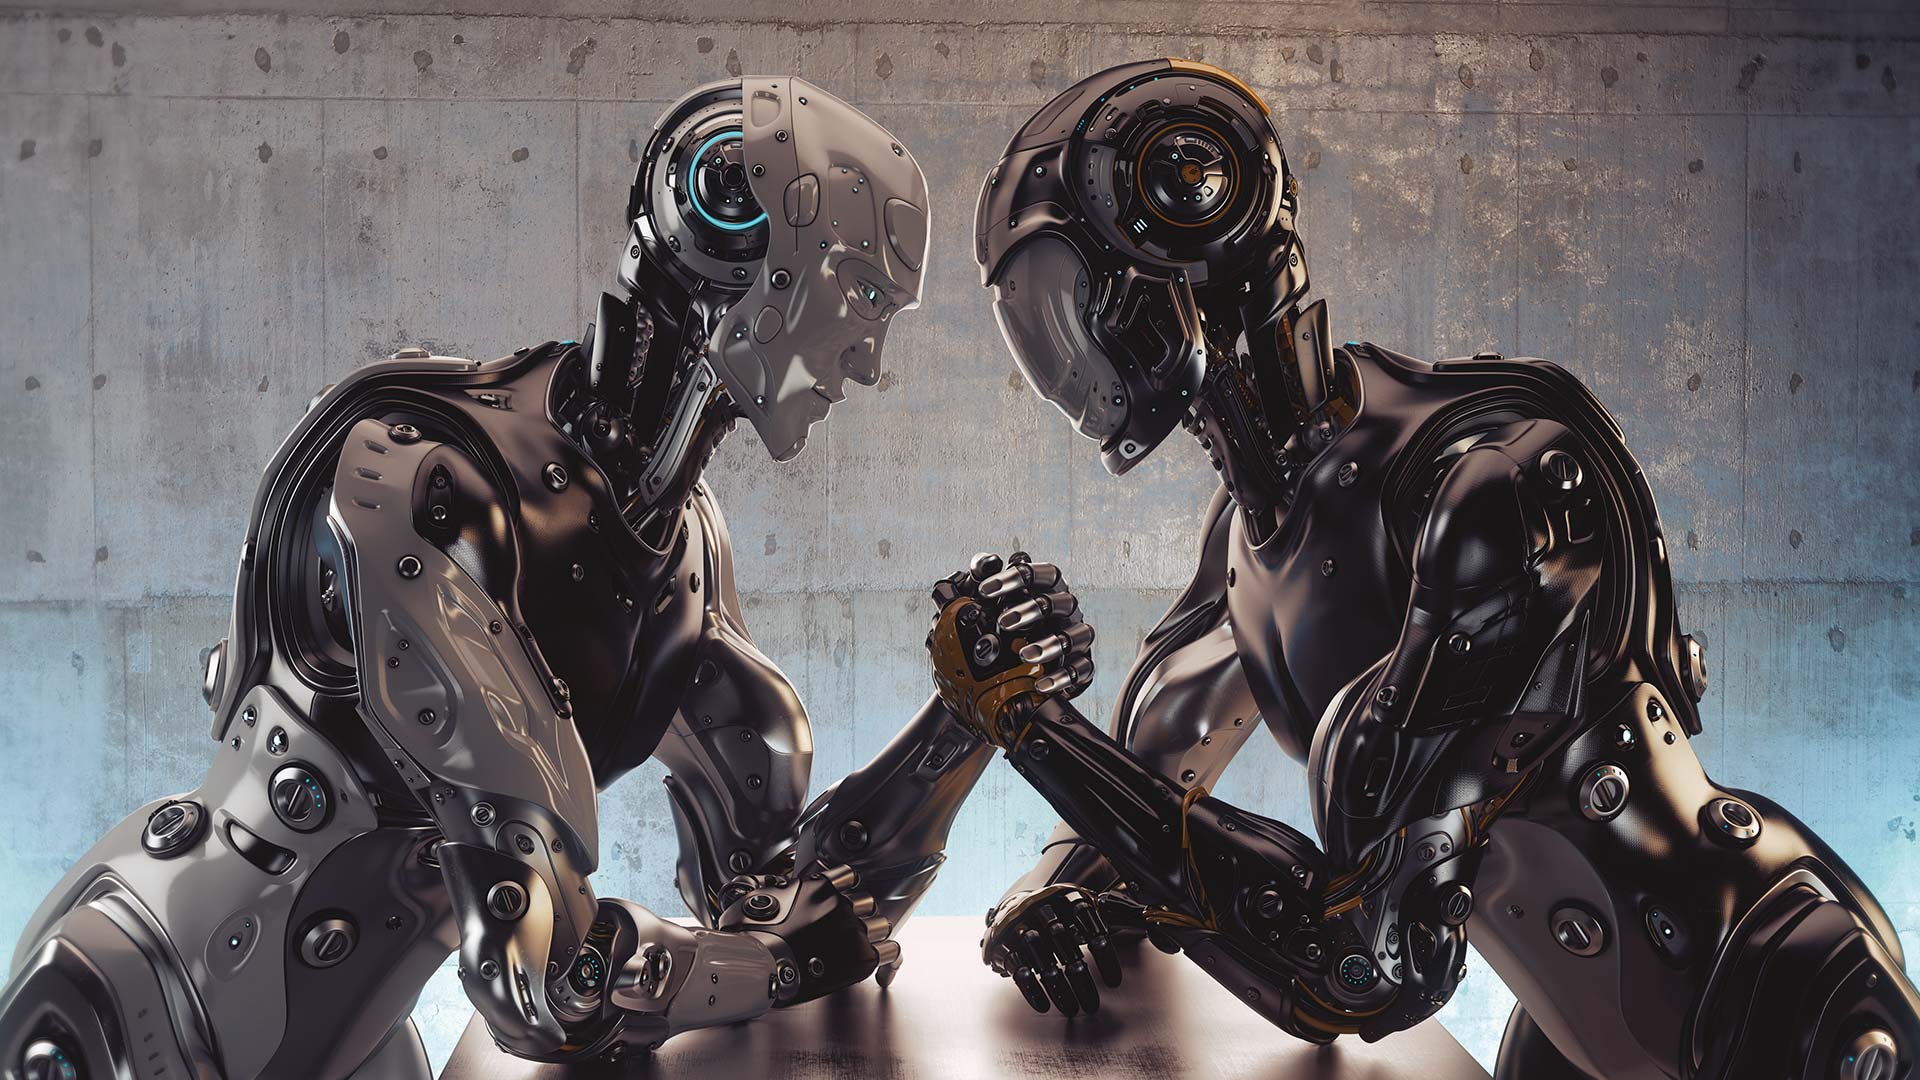 Two robots having an arm wrestle